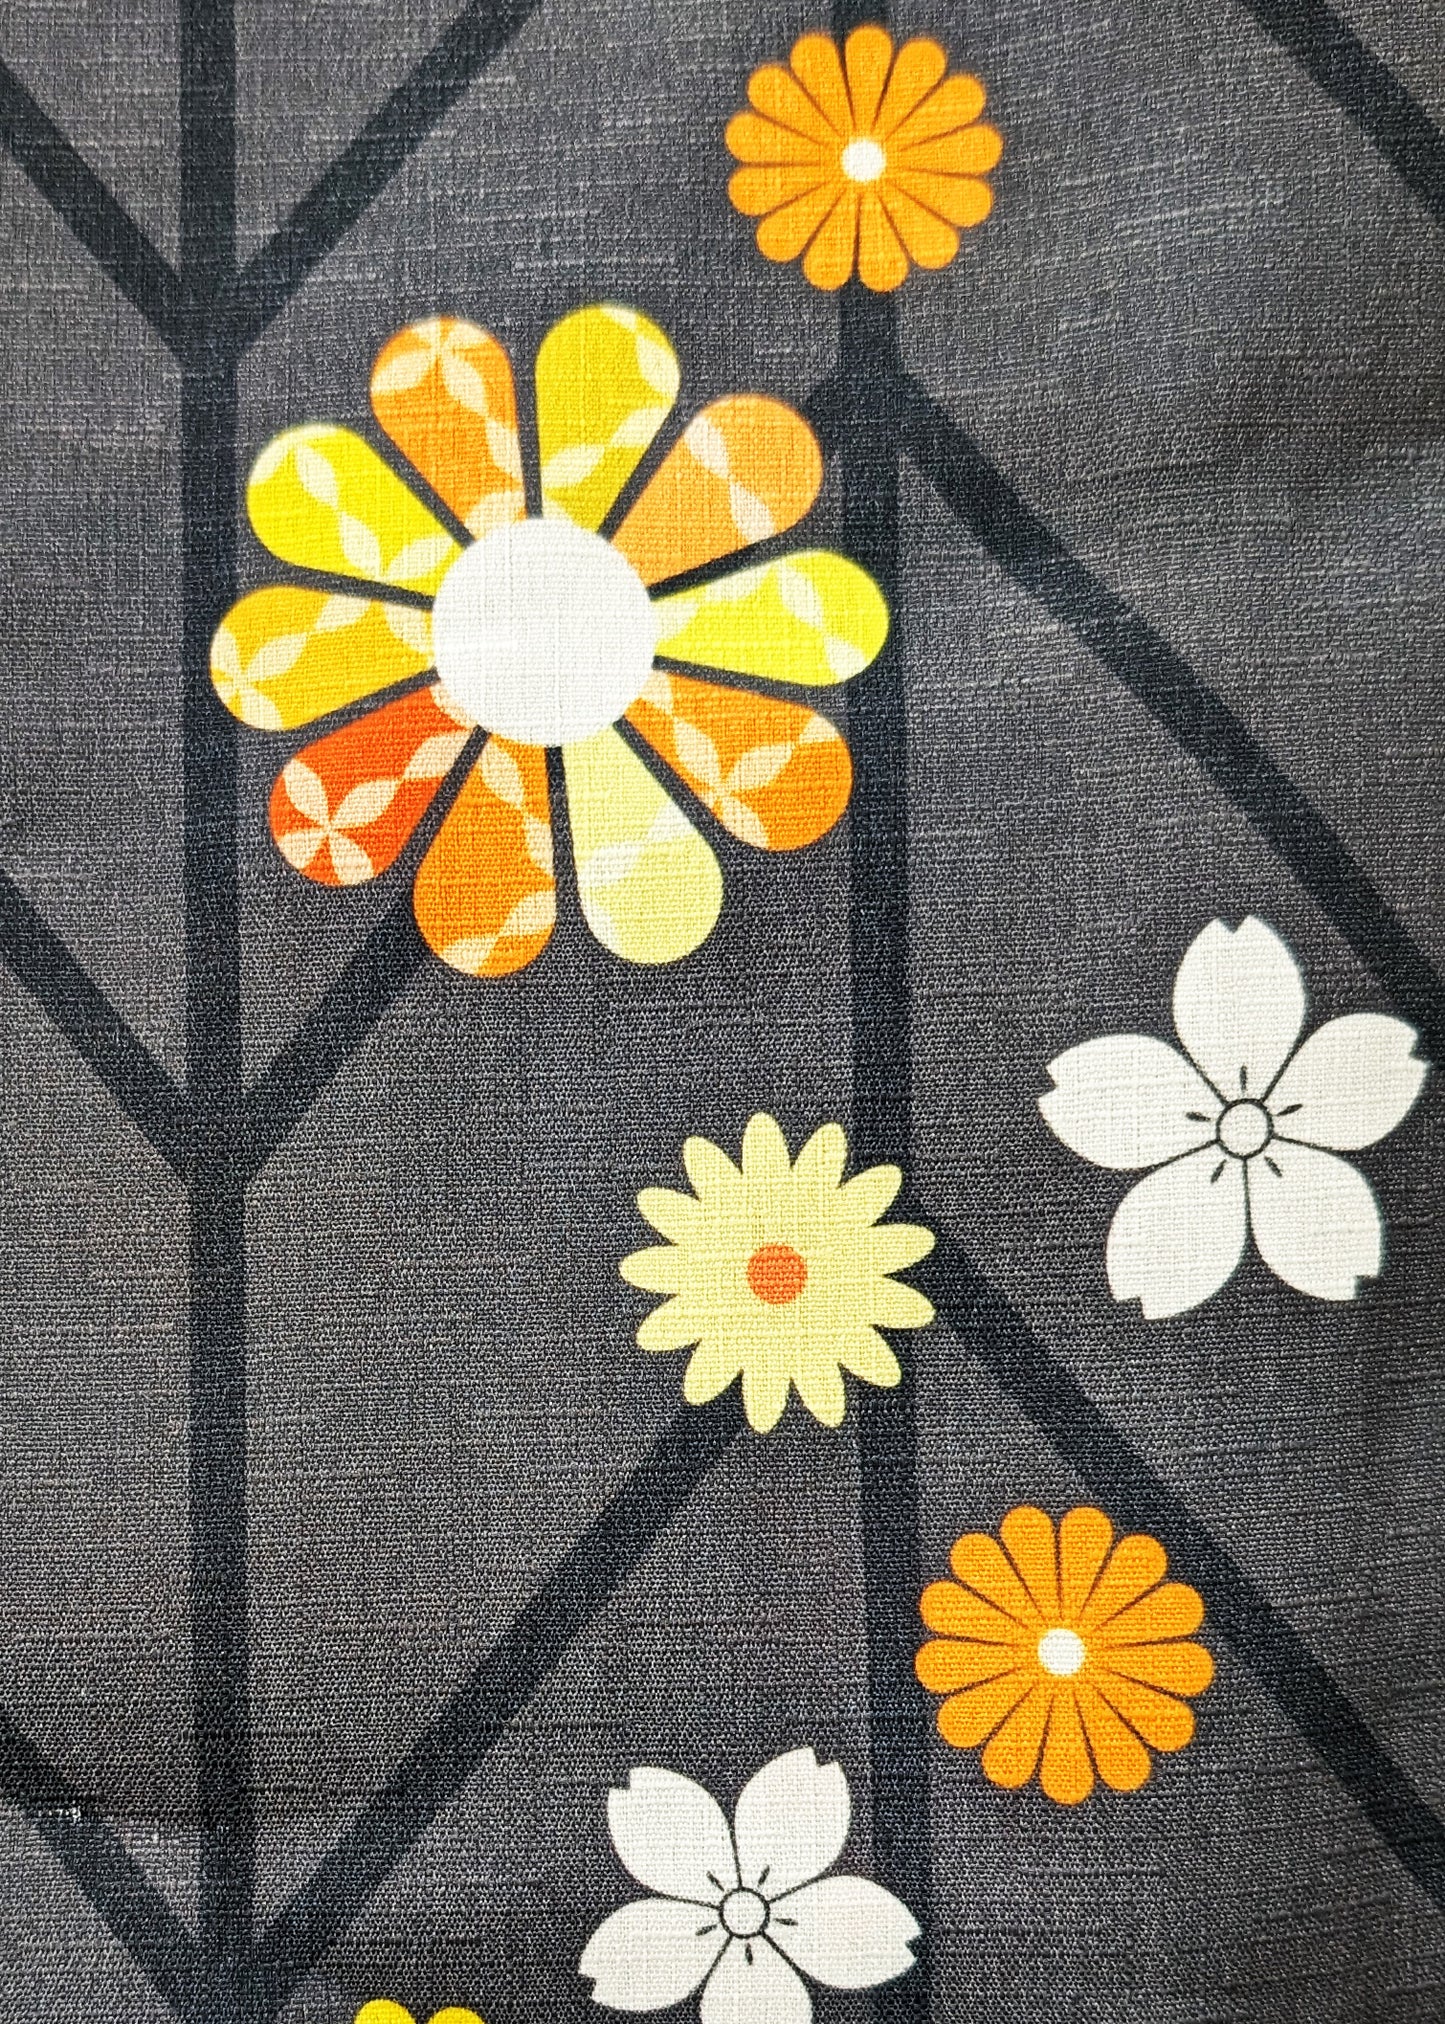 Japanese Yukata Kimono Plus Size - Yellow and Orange Flowers in Patterned Gray